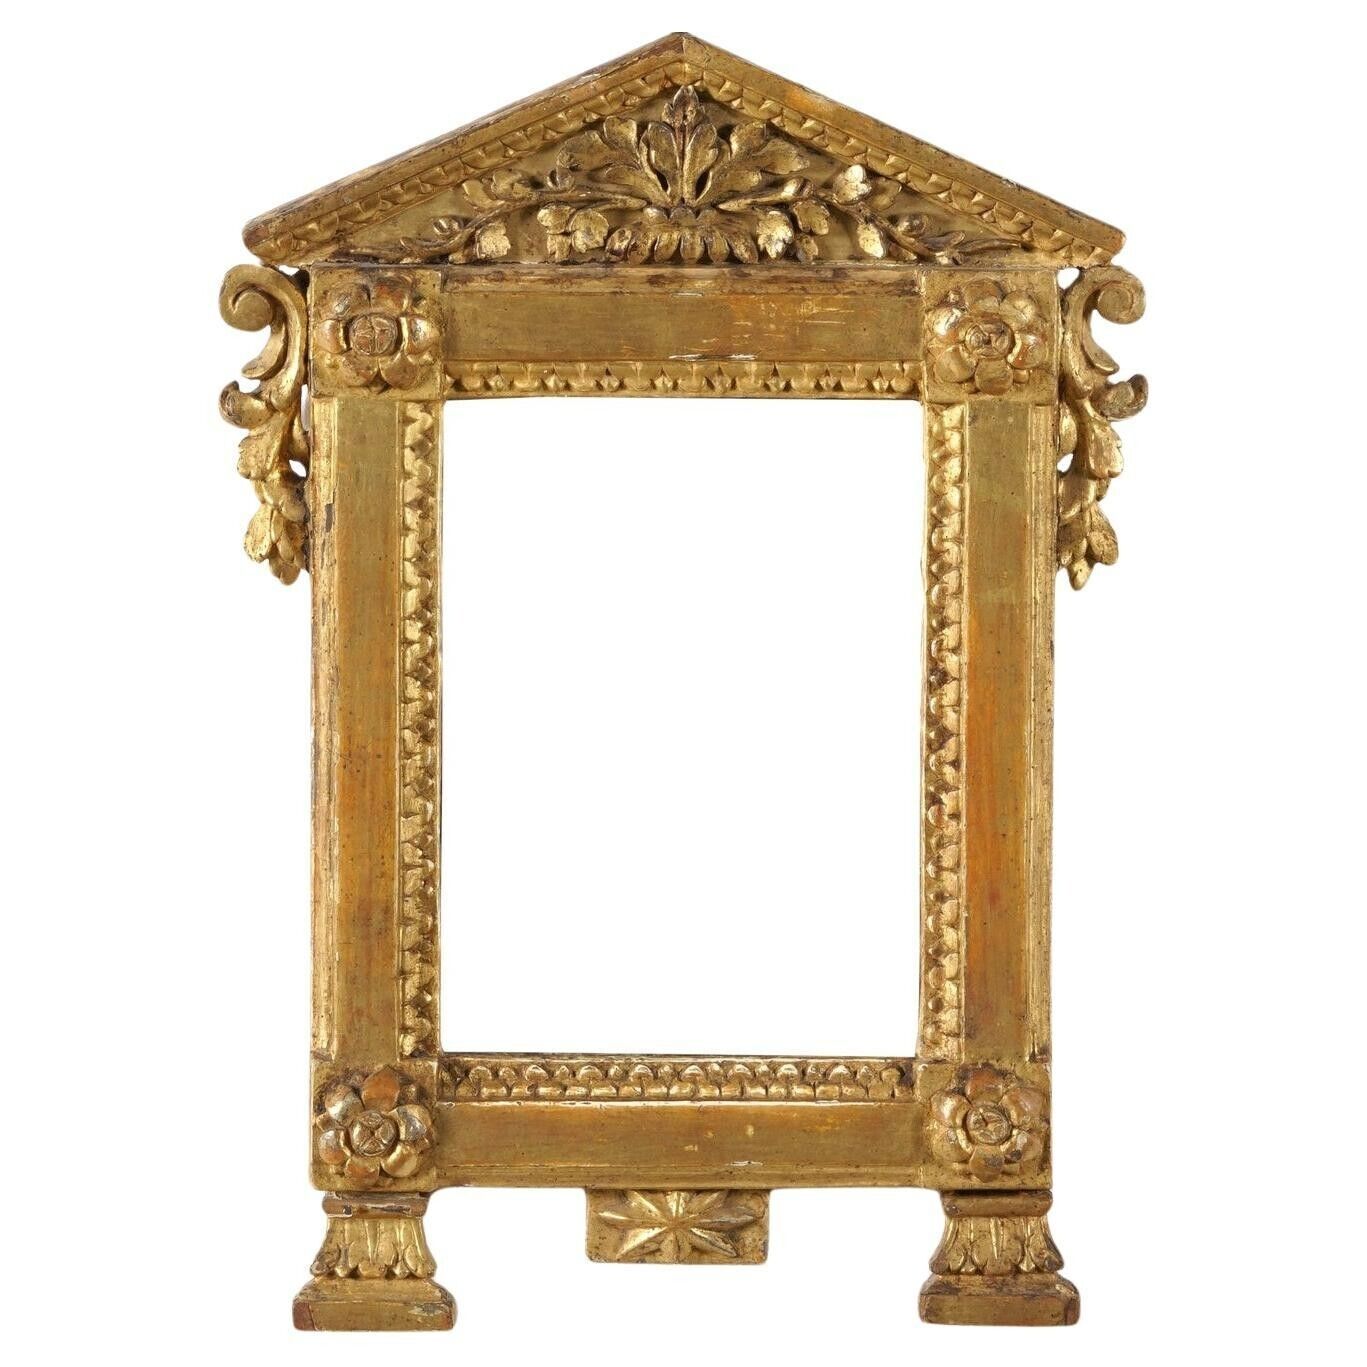 Antique Italian 18th century giltwood frame